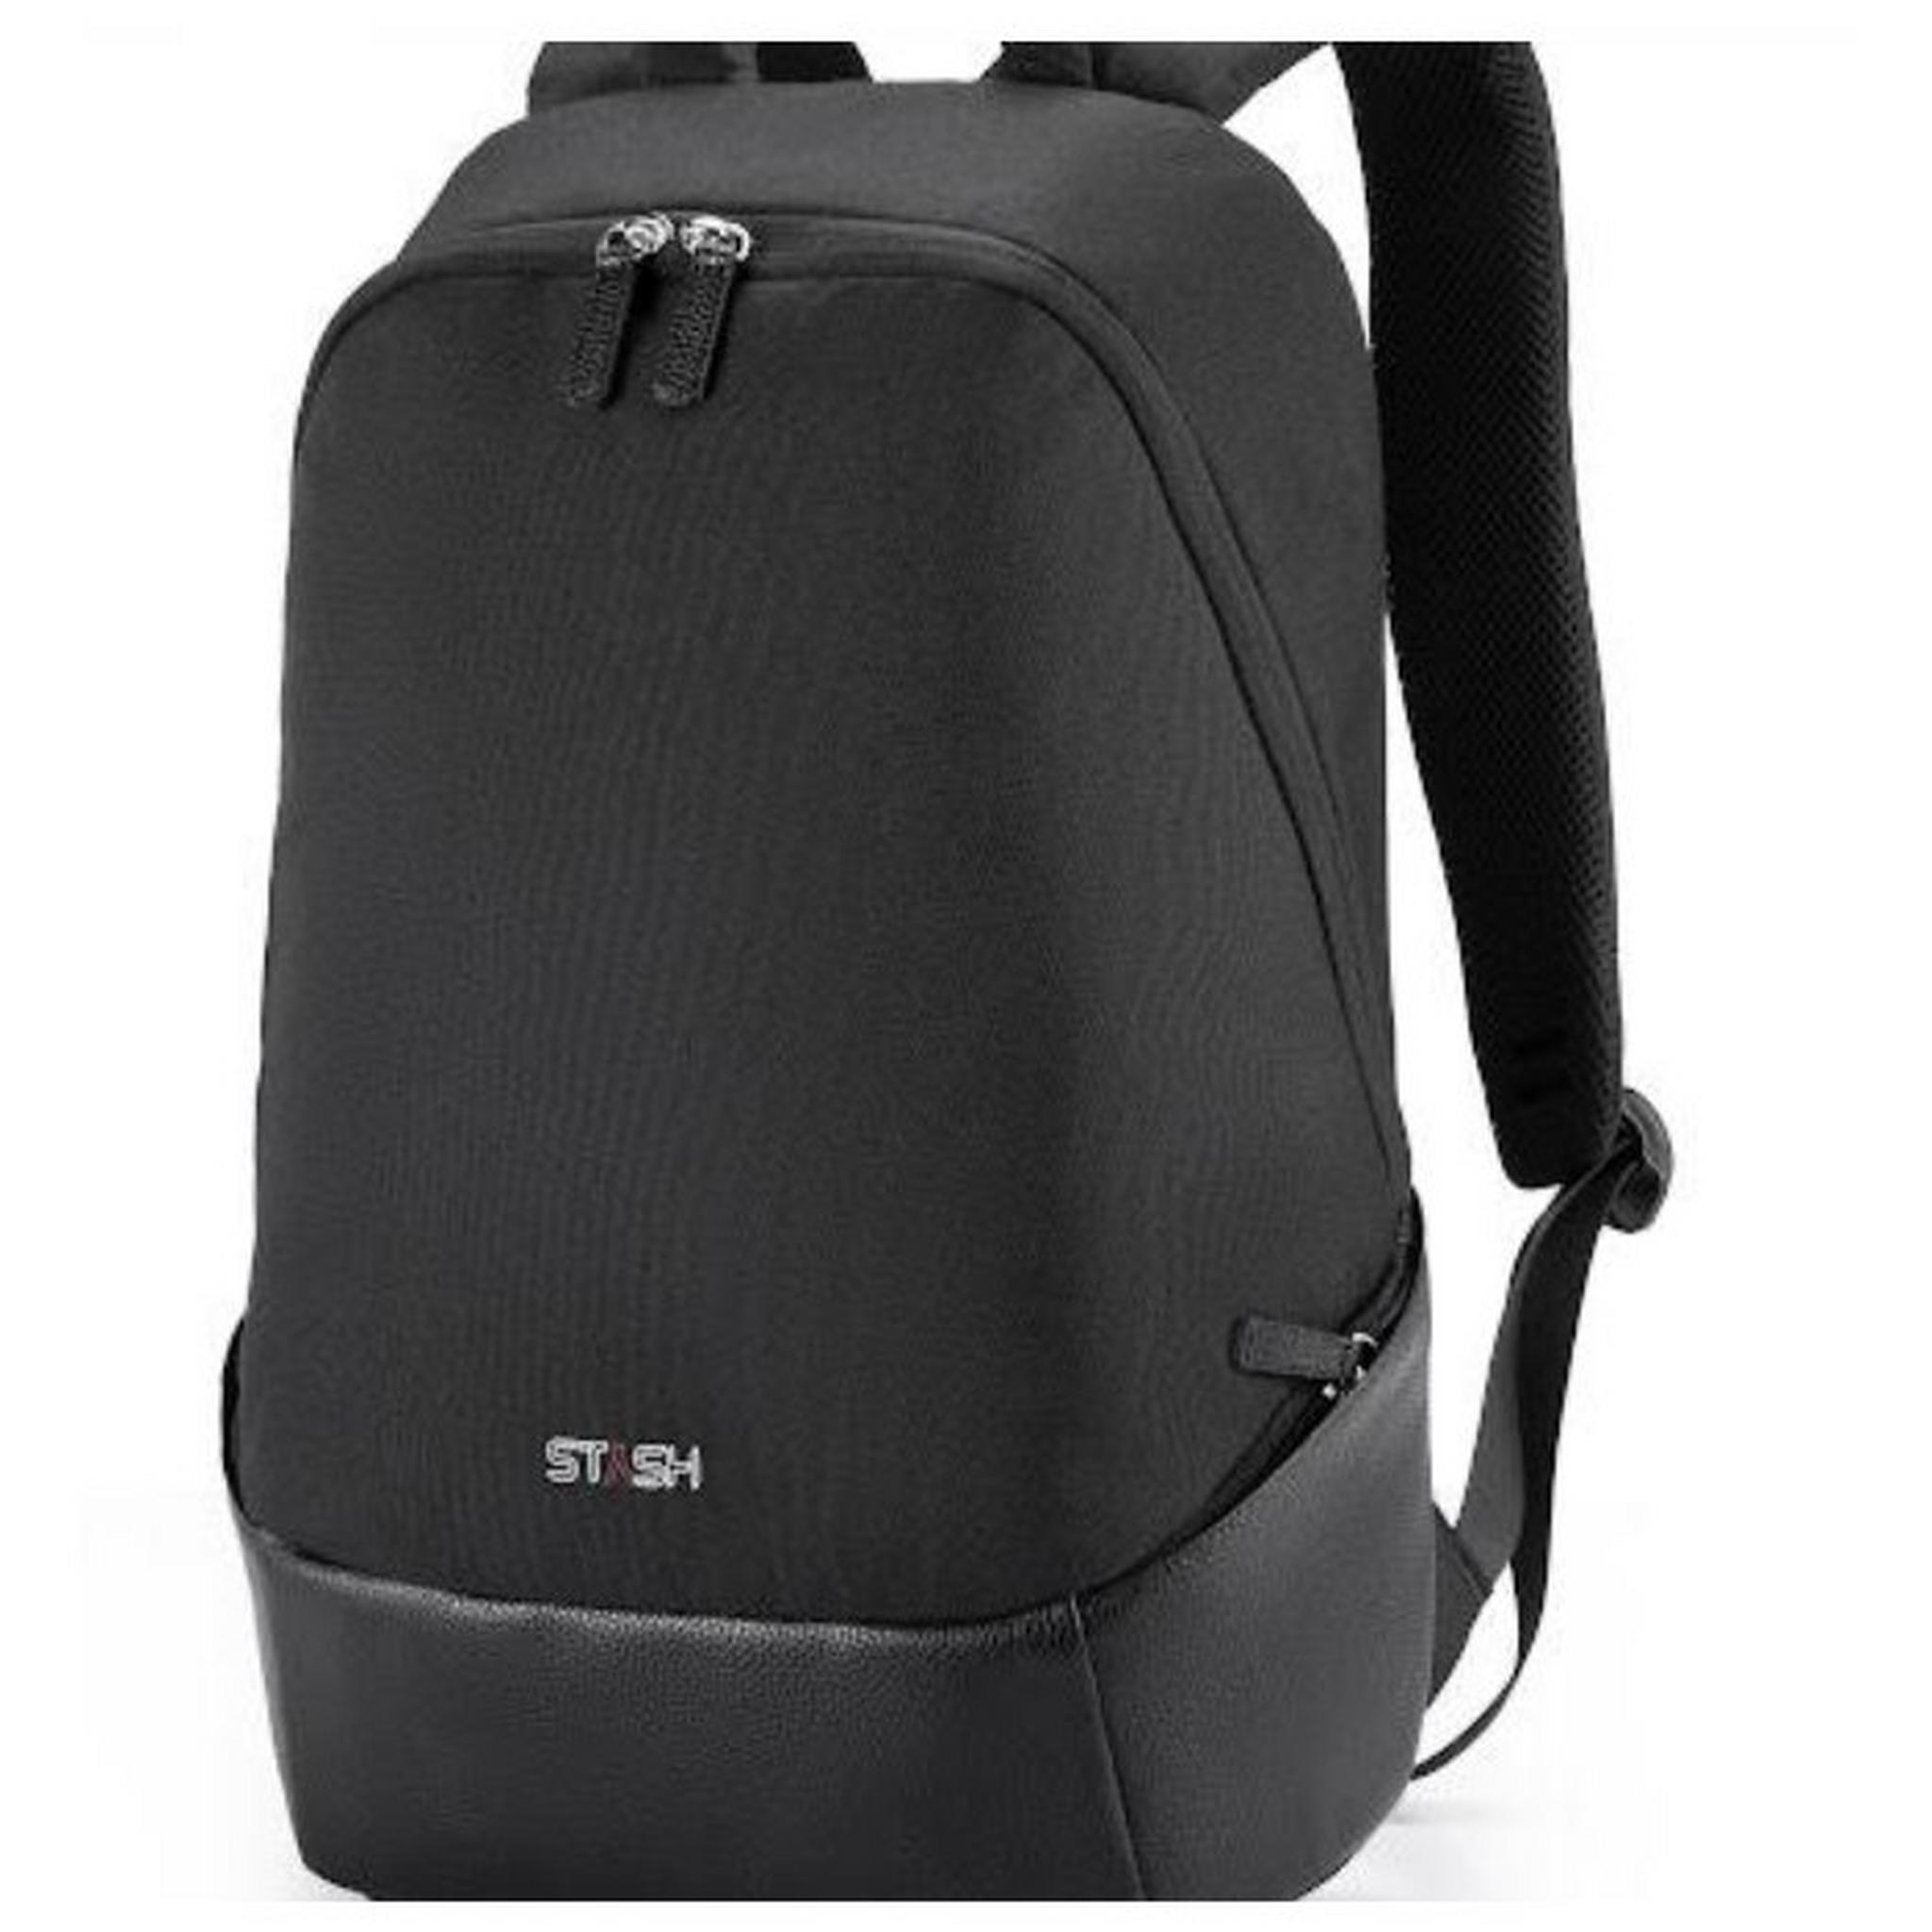 Stash 15.6-inch Laptop Backpack, K9920W – Black